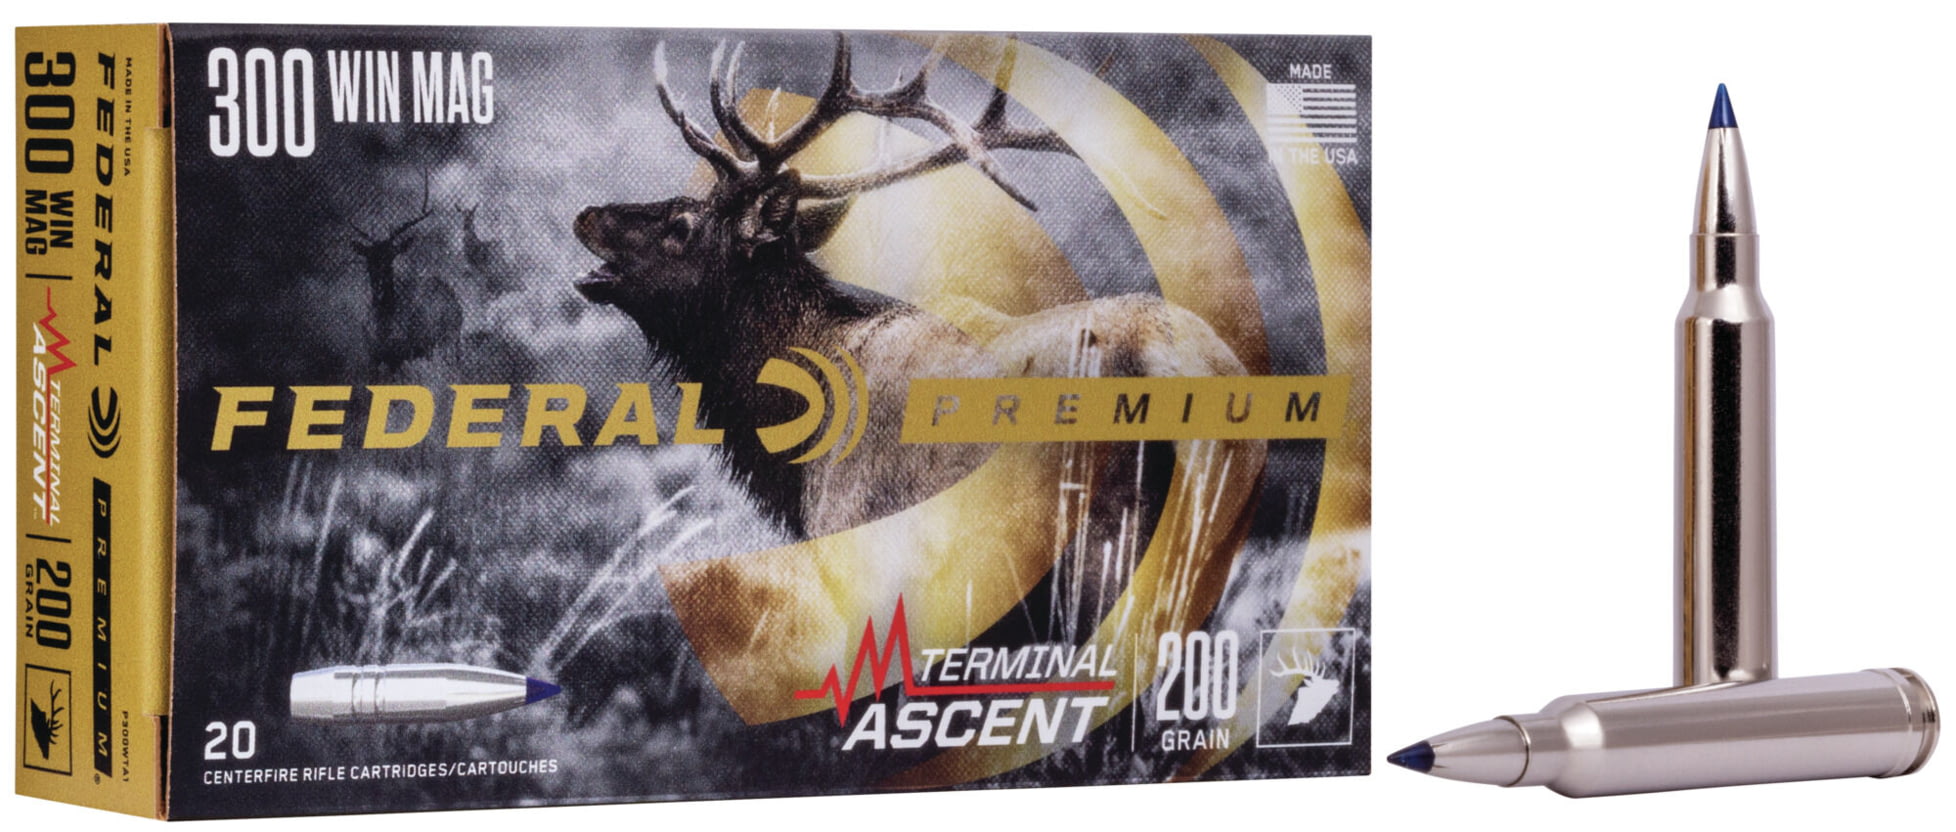 Federal Premium TERMINAL ASCENT .300 Winchester Magnum 200 grain Terminal Ascent Centerfire Rifle Ammunition